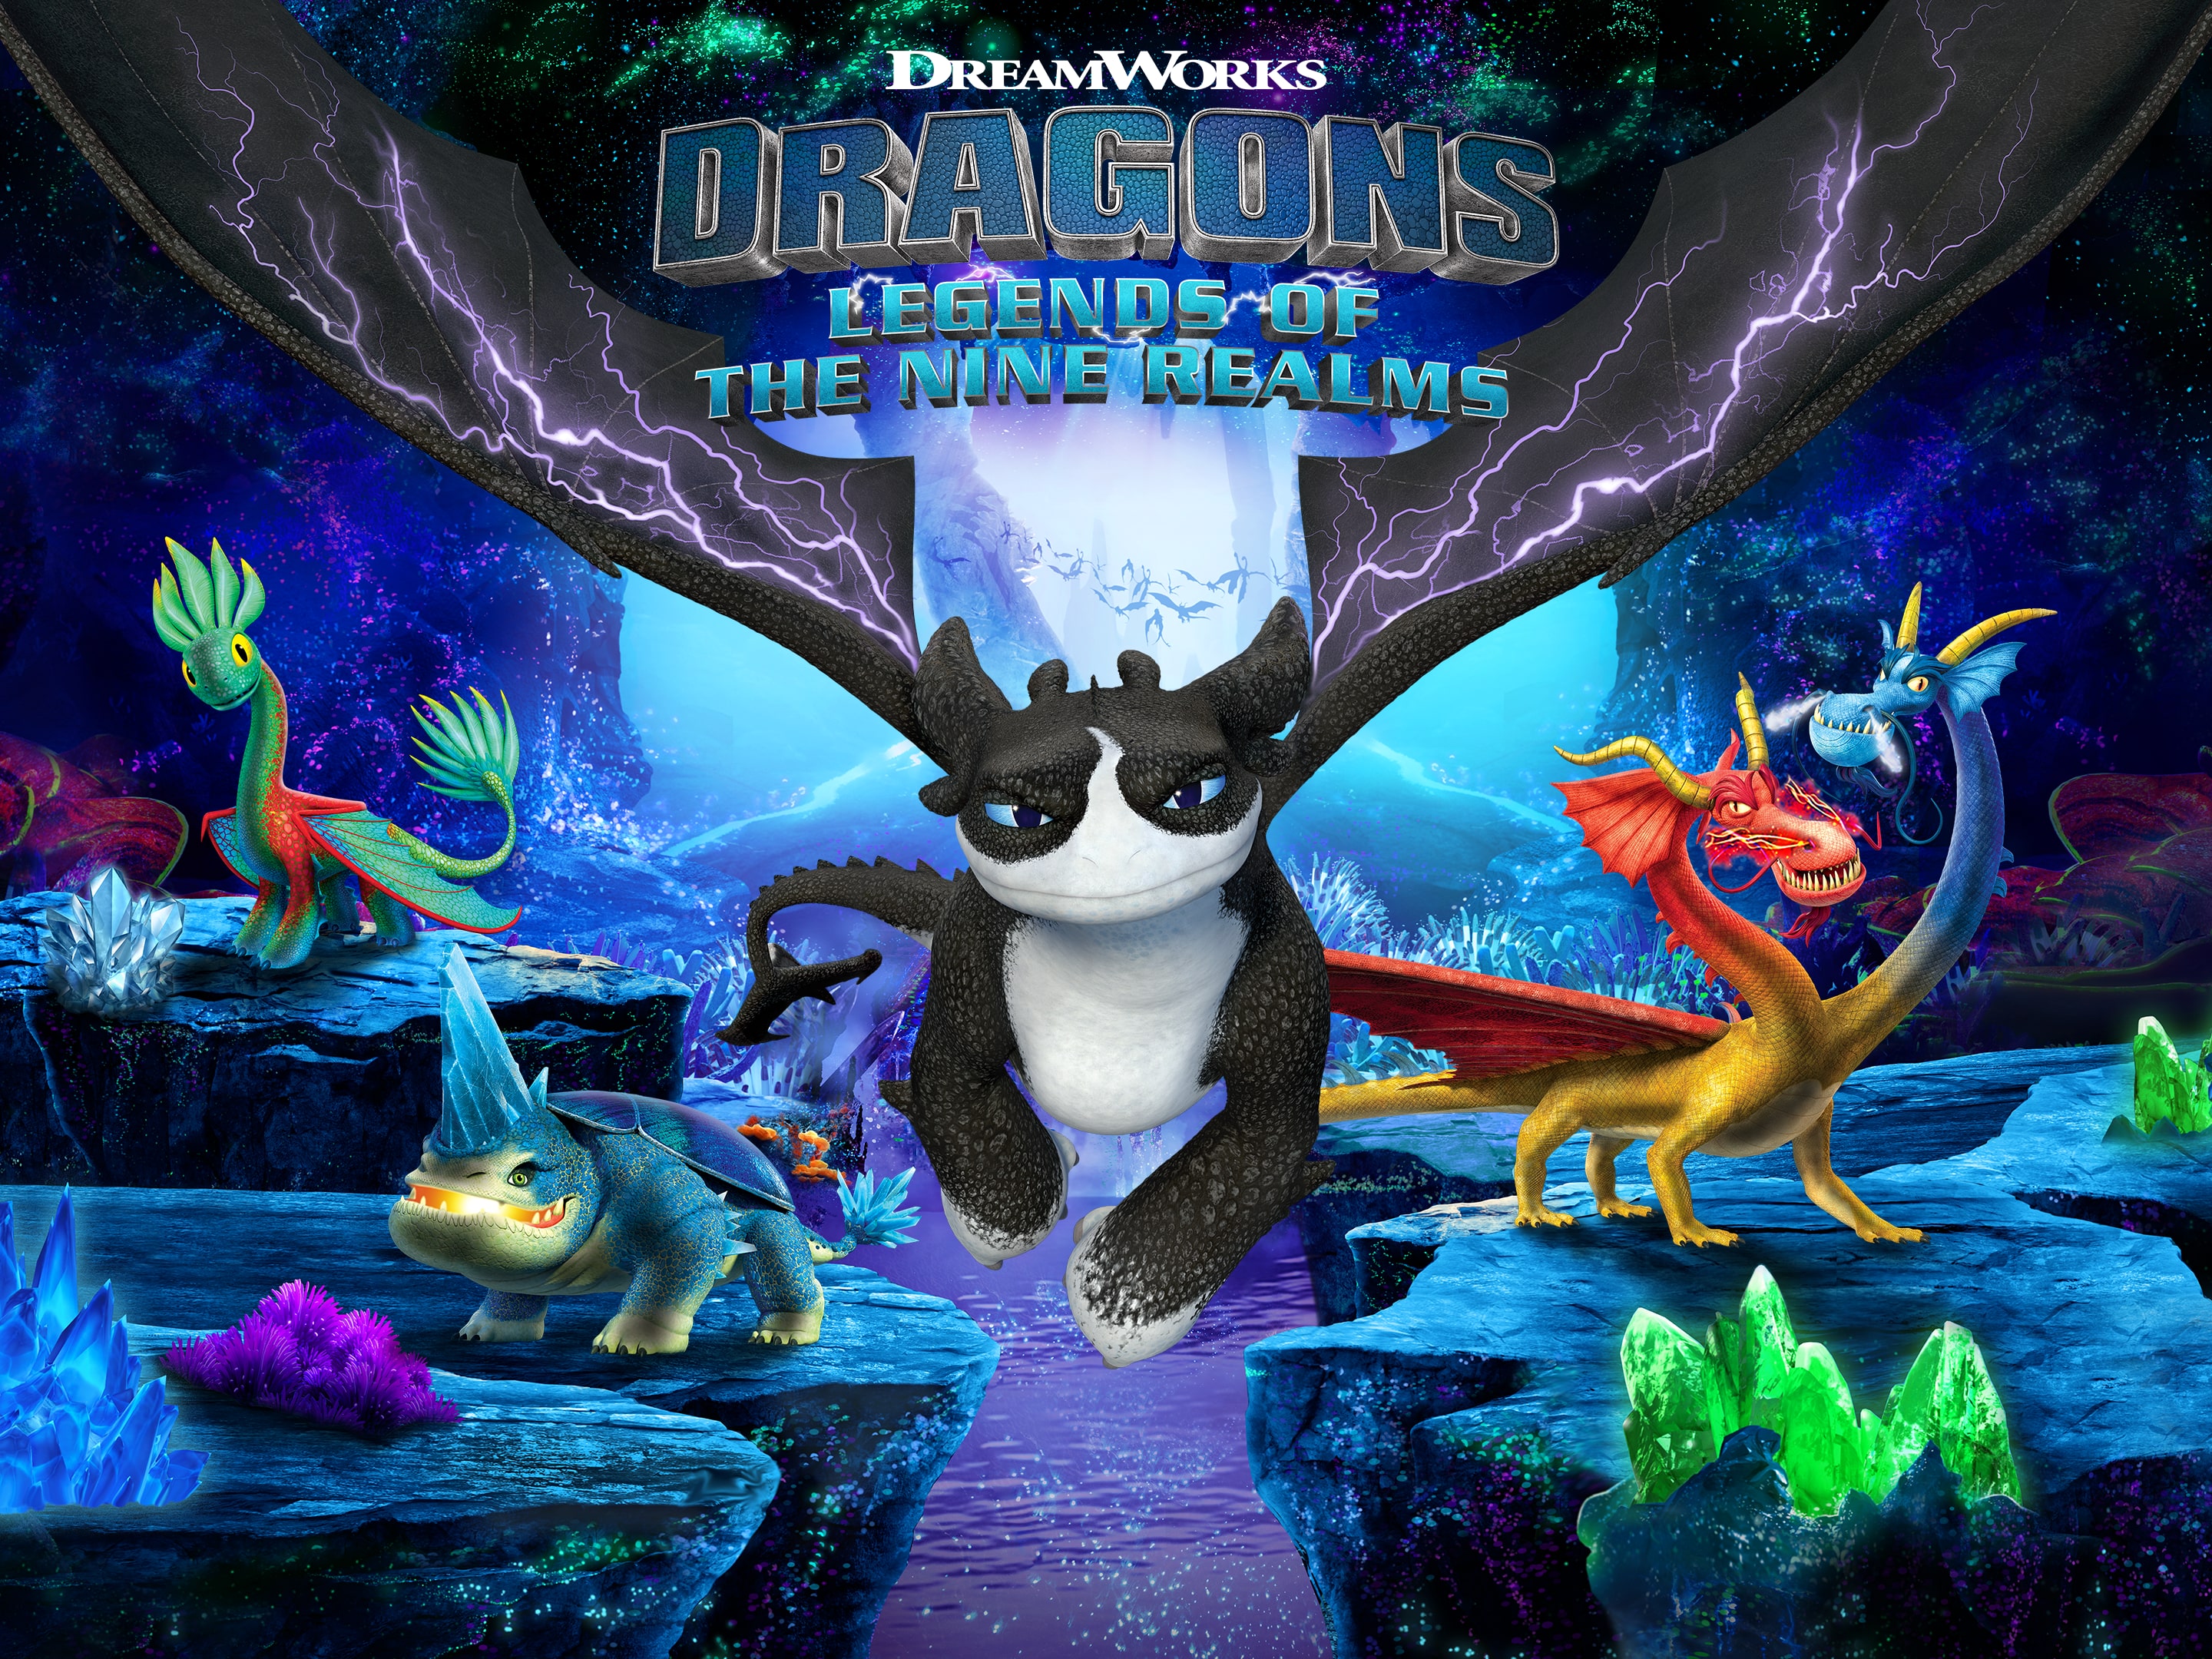 Playstation 4 Game Ps4 Game Dreamworks Dragons Legends Of The Nine